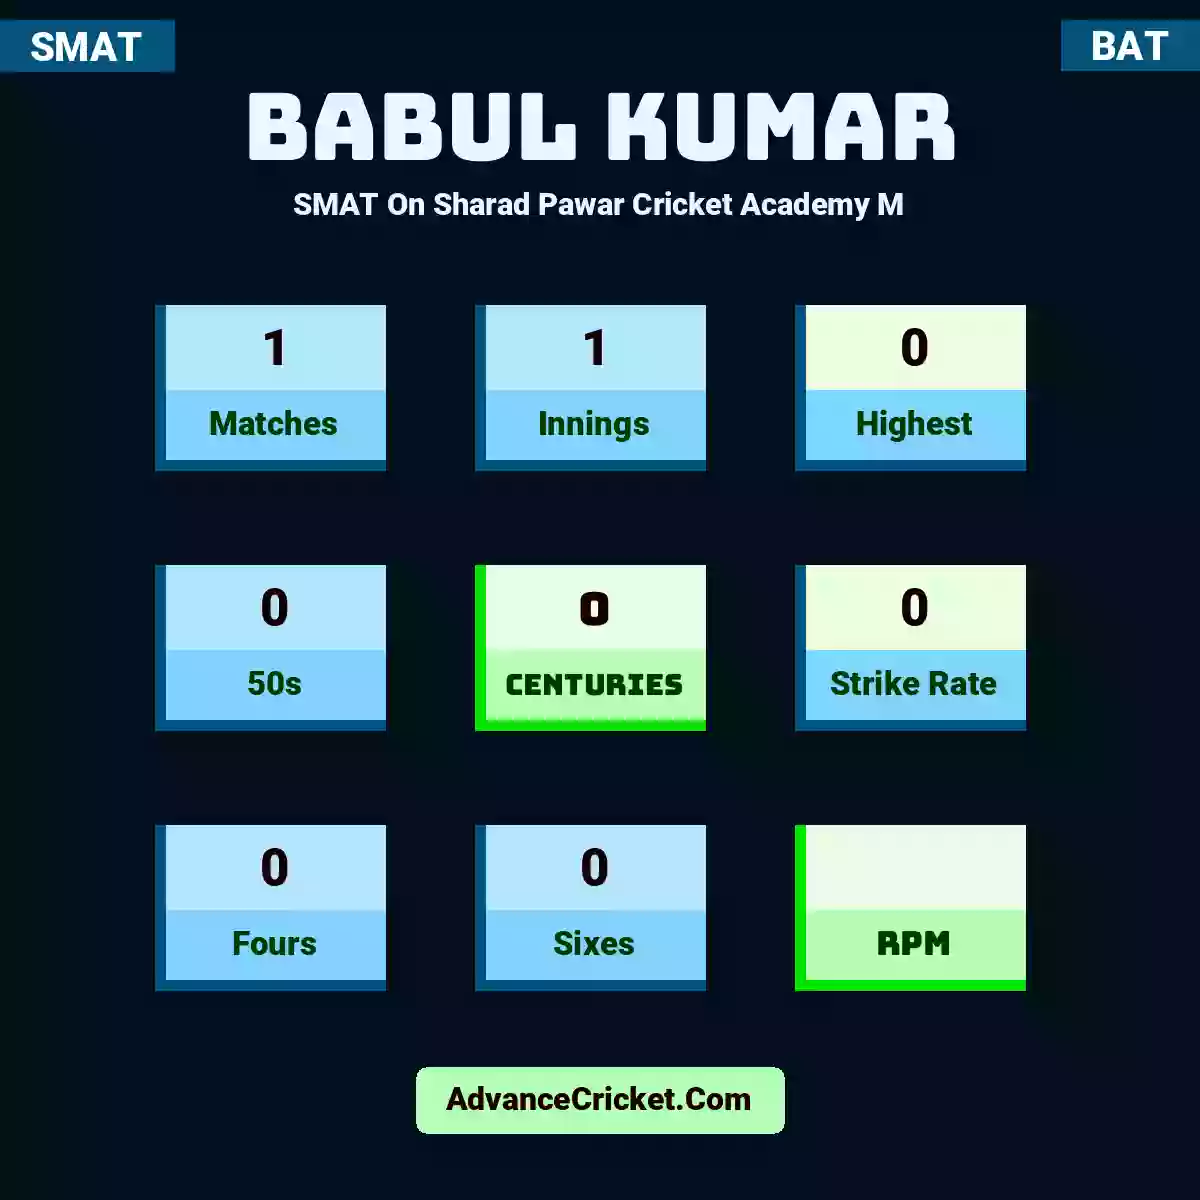 Babul Kumar SMAT  On Sharad Pawar Cricket Academy M, Babul Kumar played 1 matches, scored 0 runs as highest, 0 half-centuries, and 0 centuries, with a strike rate of 0. B.Kumar hit 0 fours and 0 sixes.